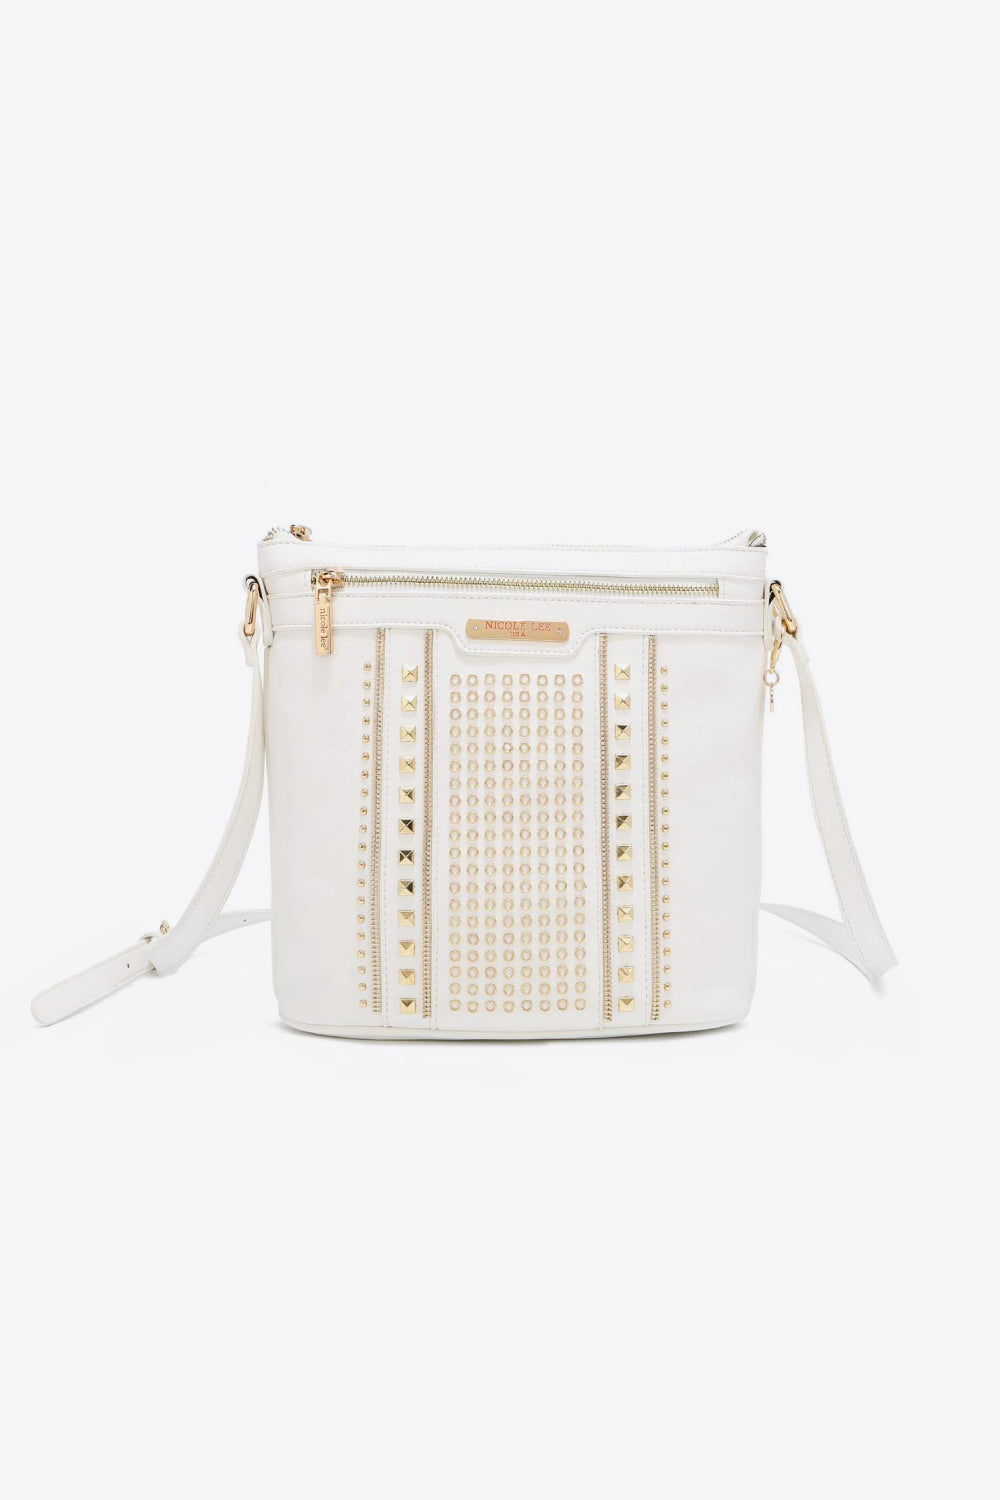 White Smoke Nicole Lee USA Love Handbag Sentient Beauty Fashions Bag